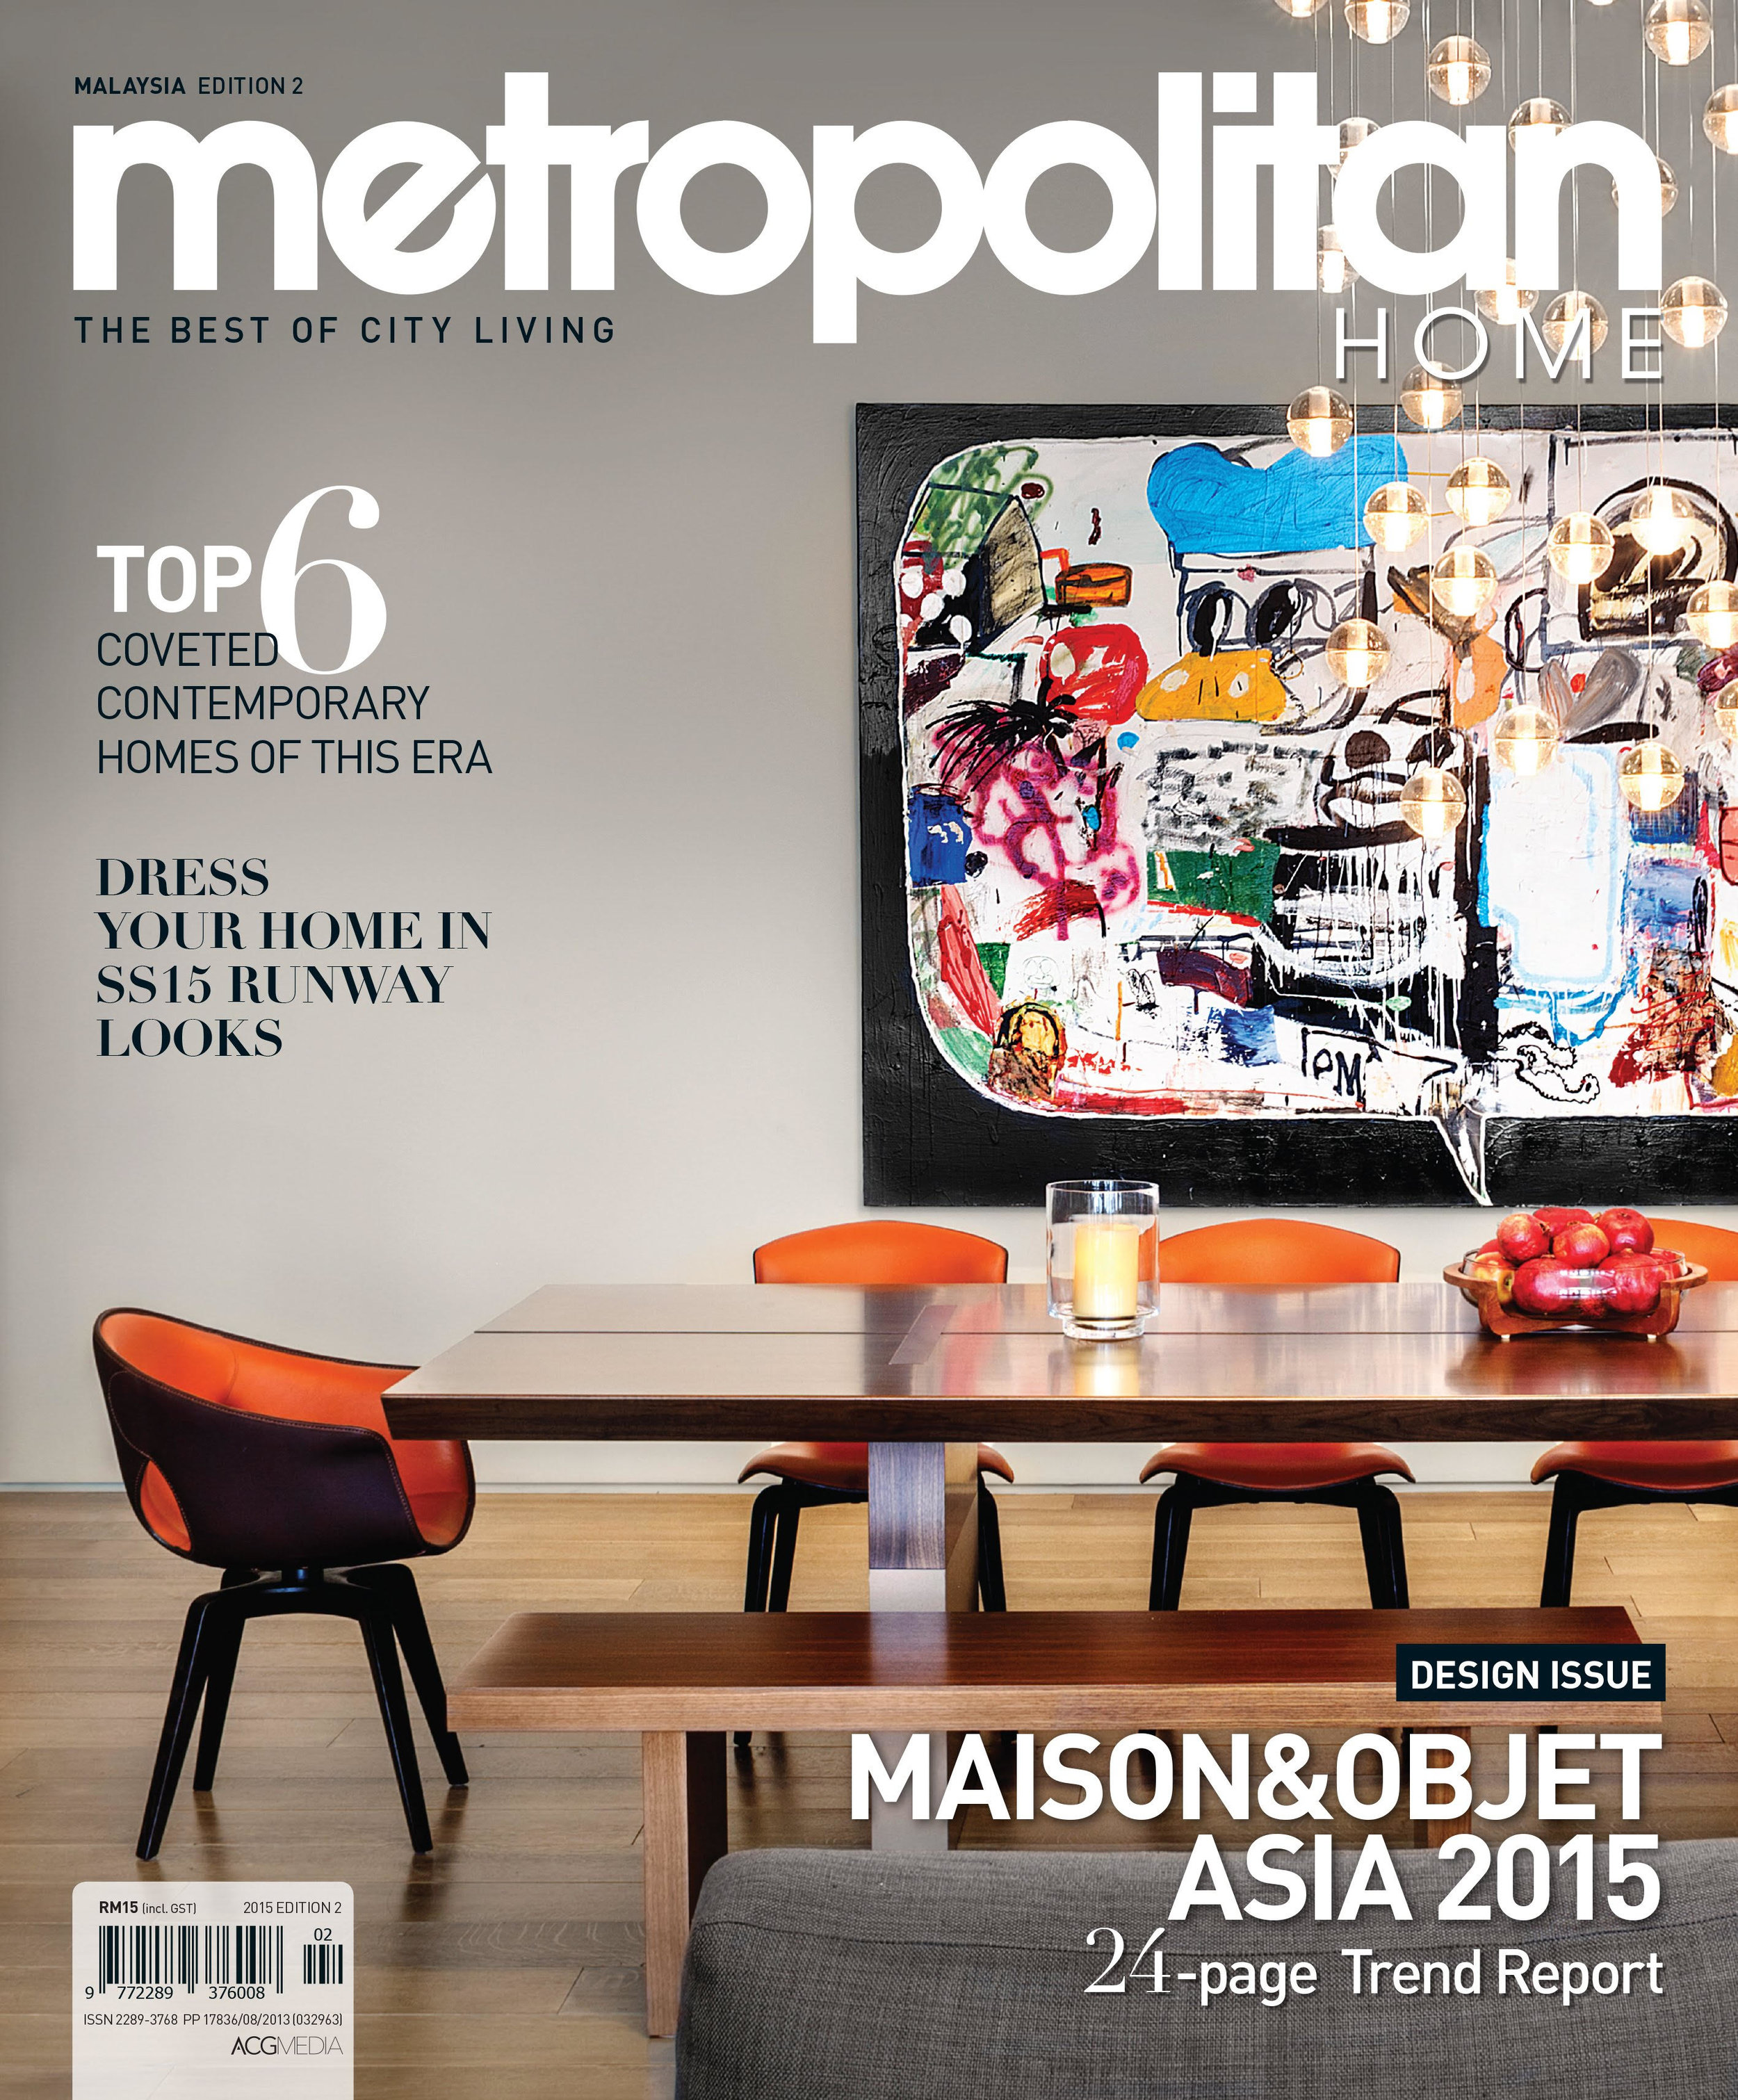 Metropolitan Home Magazine Cover